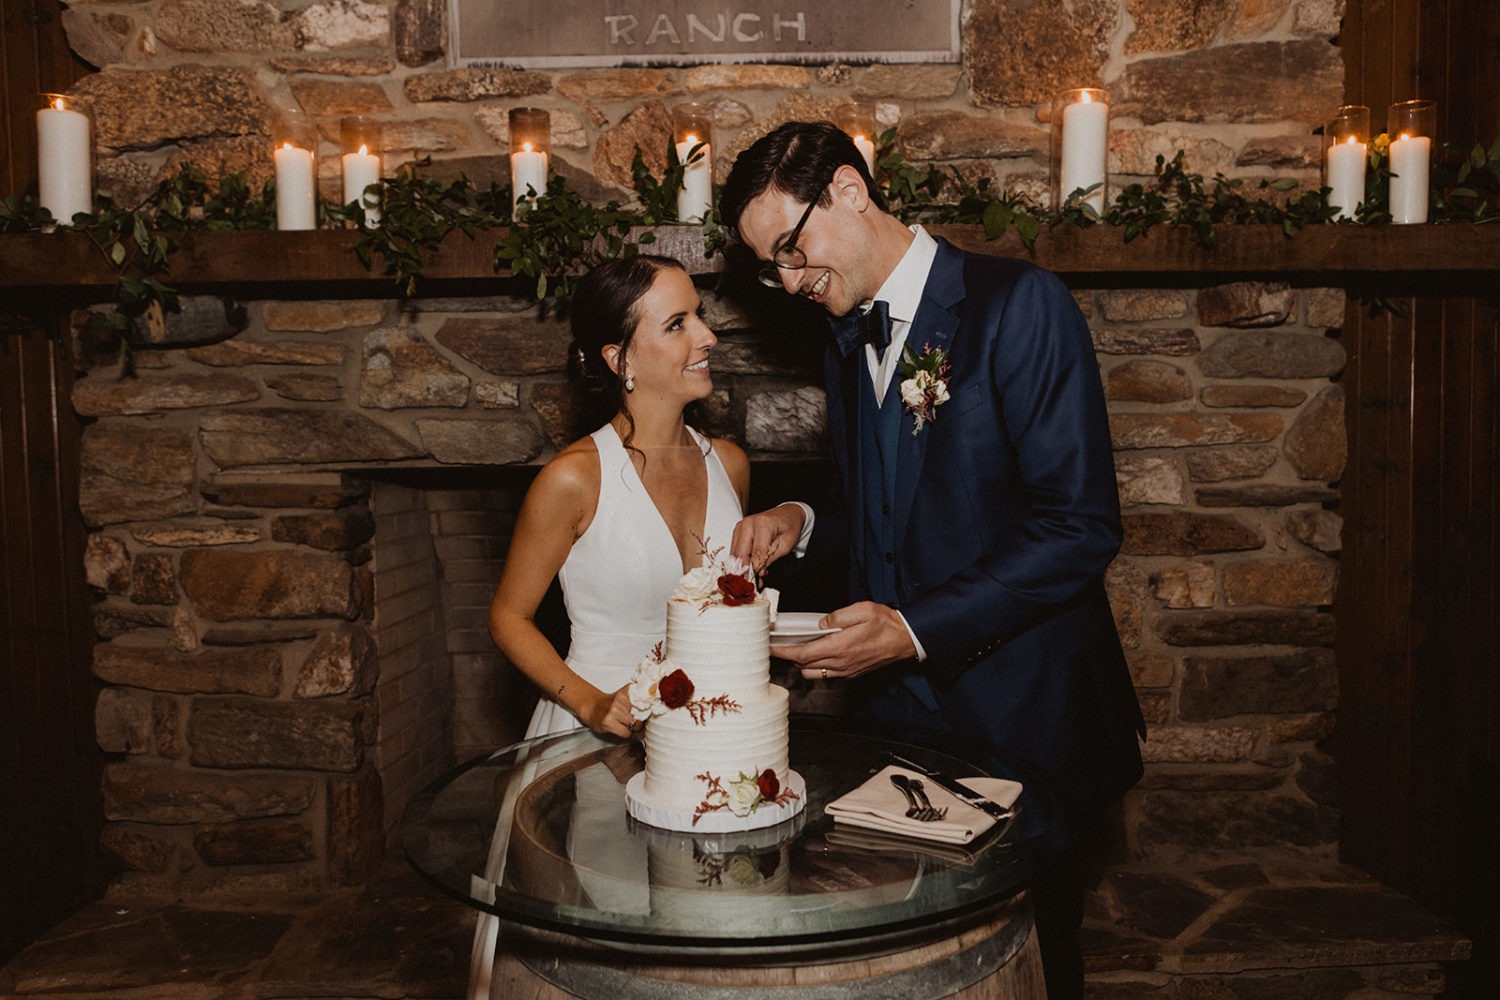 couple cuts cake at farm wedding reception